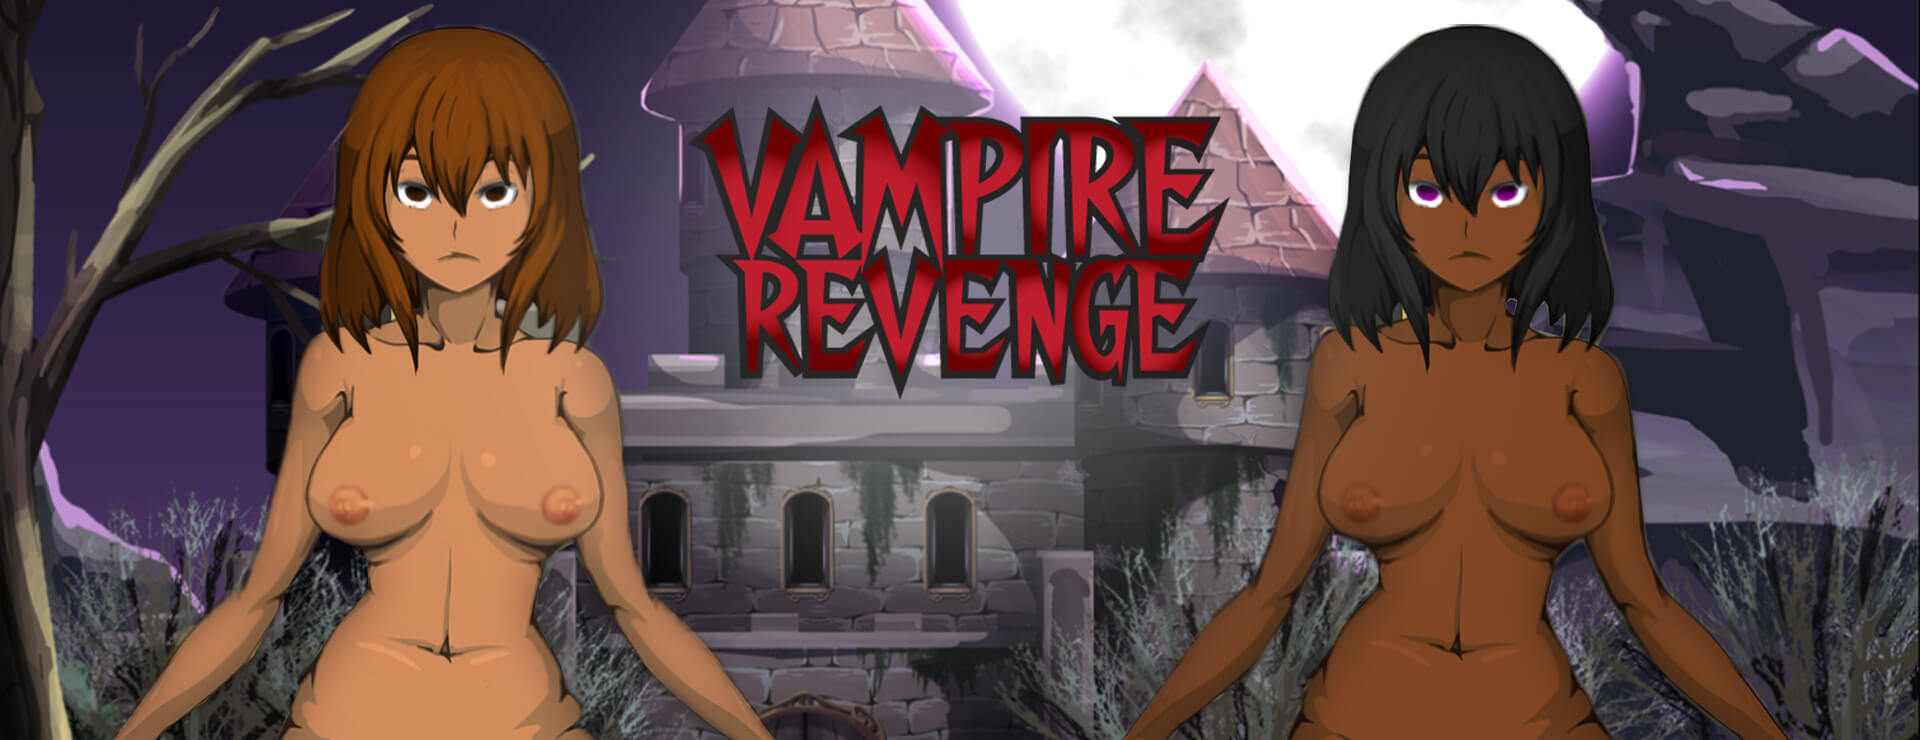 Vampire Revenge - Action Adventure Game